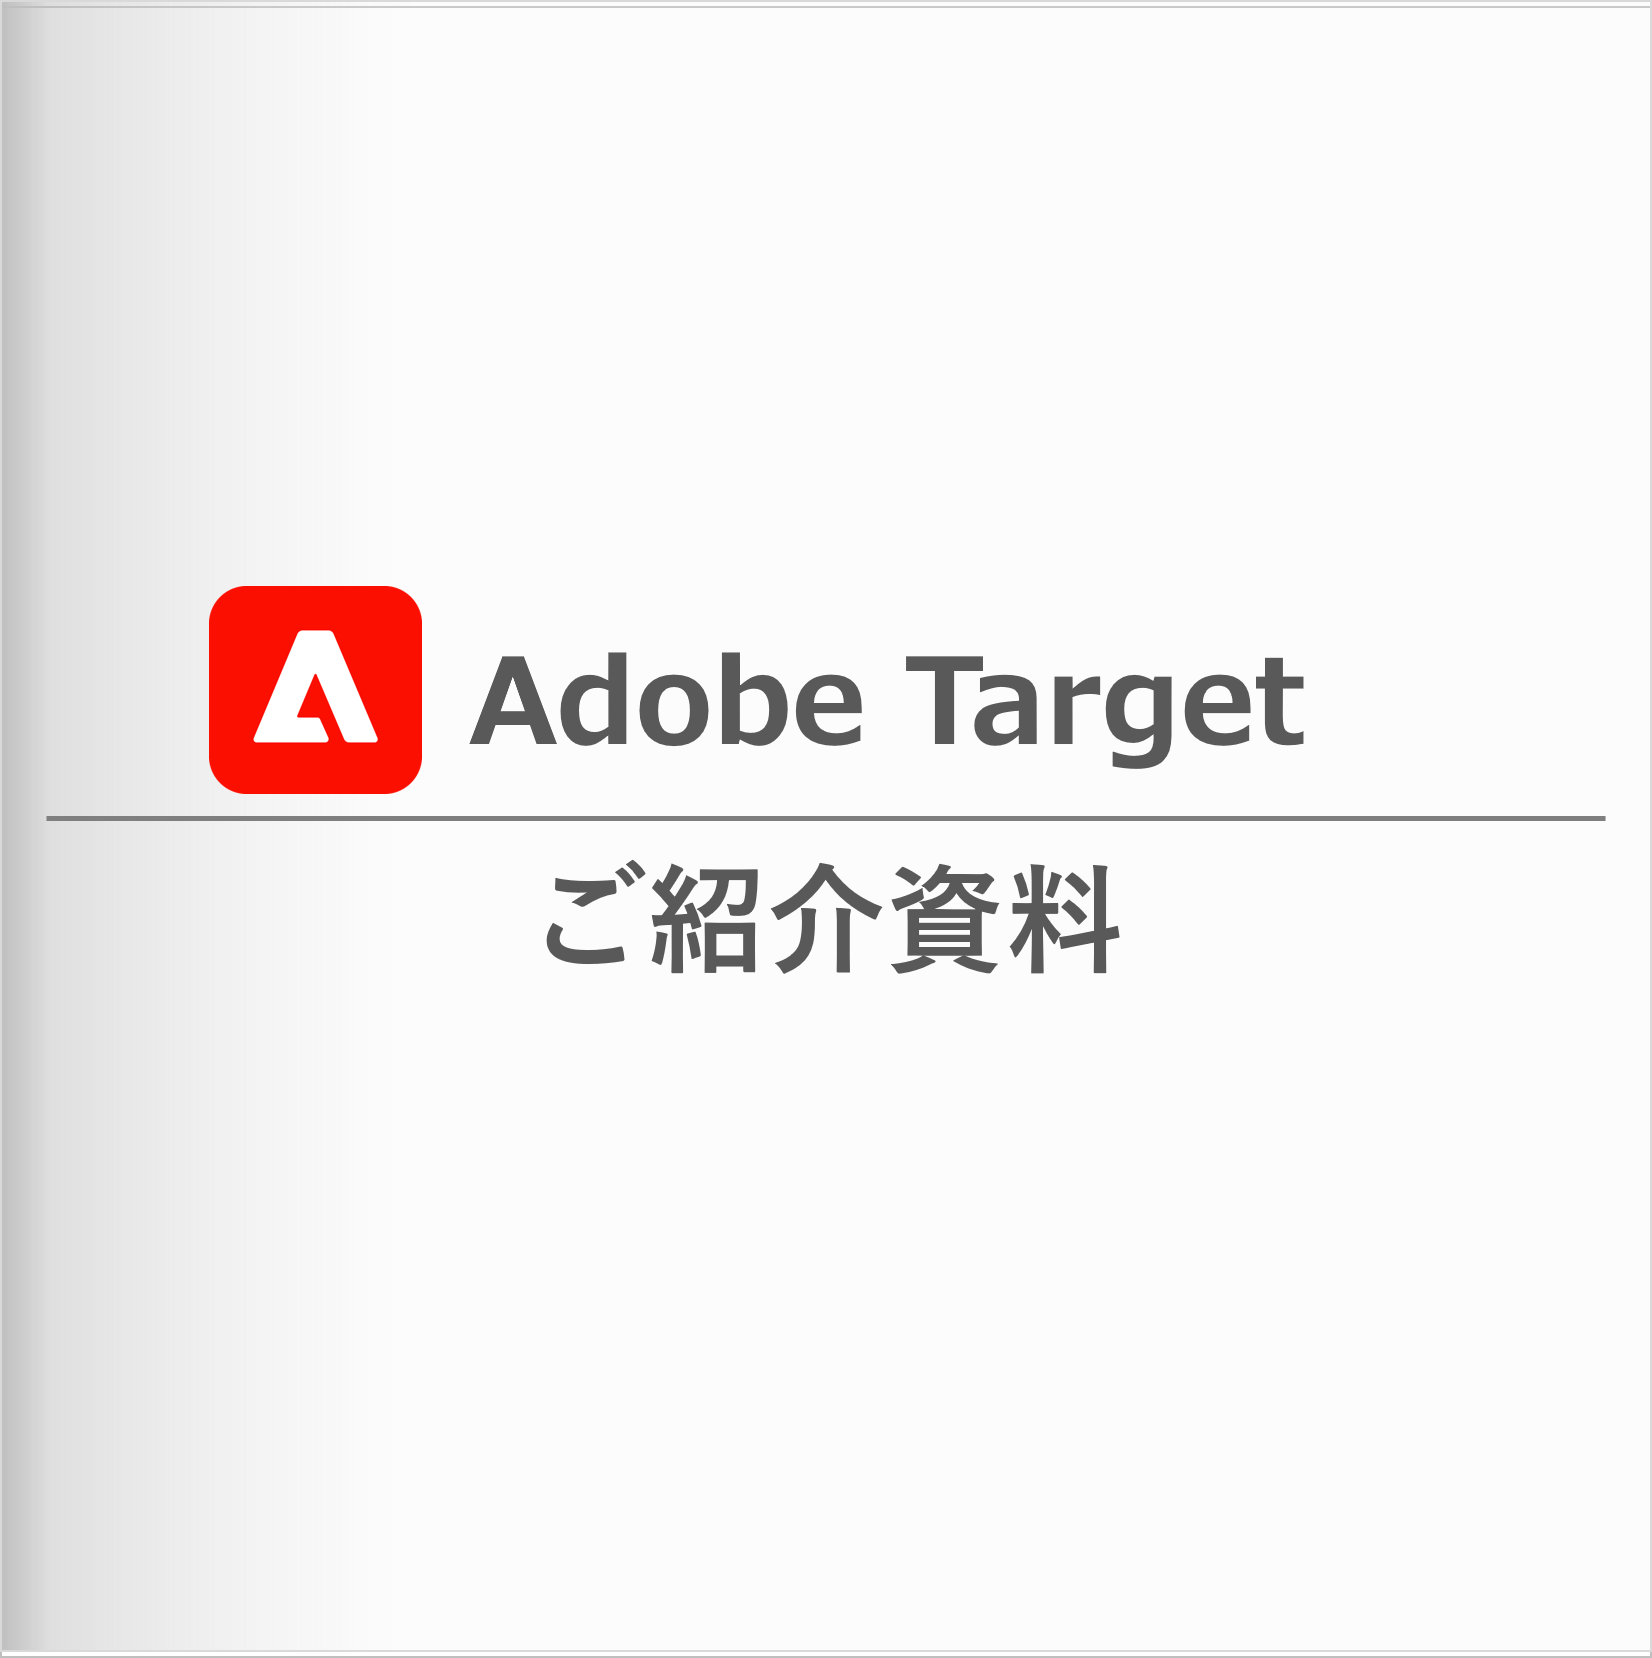 Adobe Target ご紹介資料